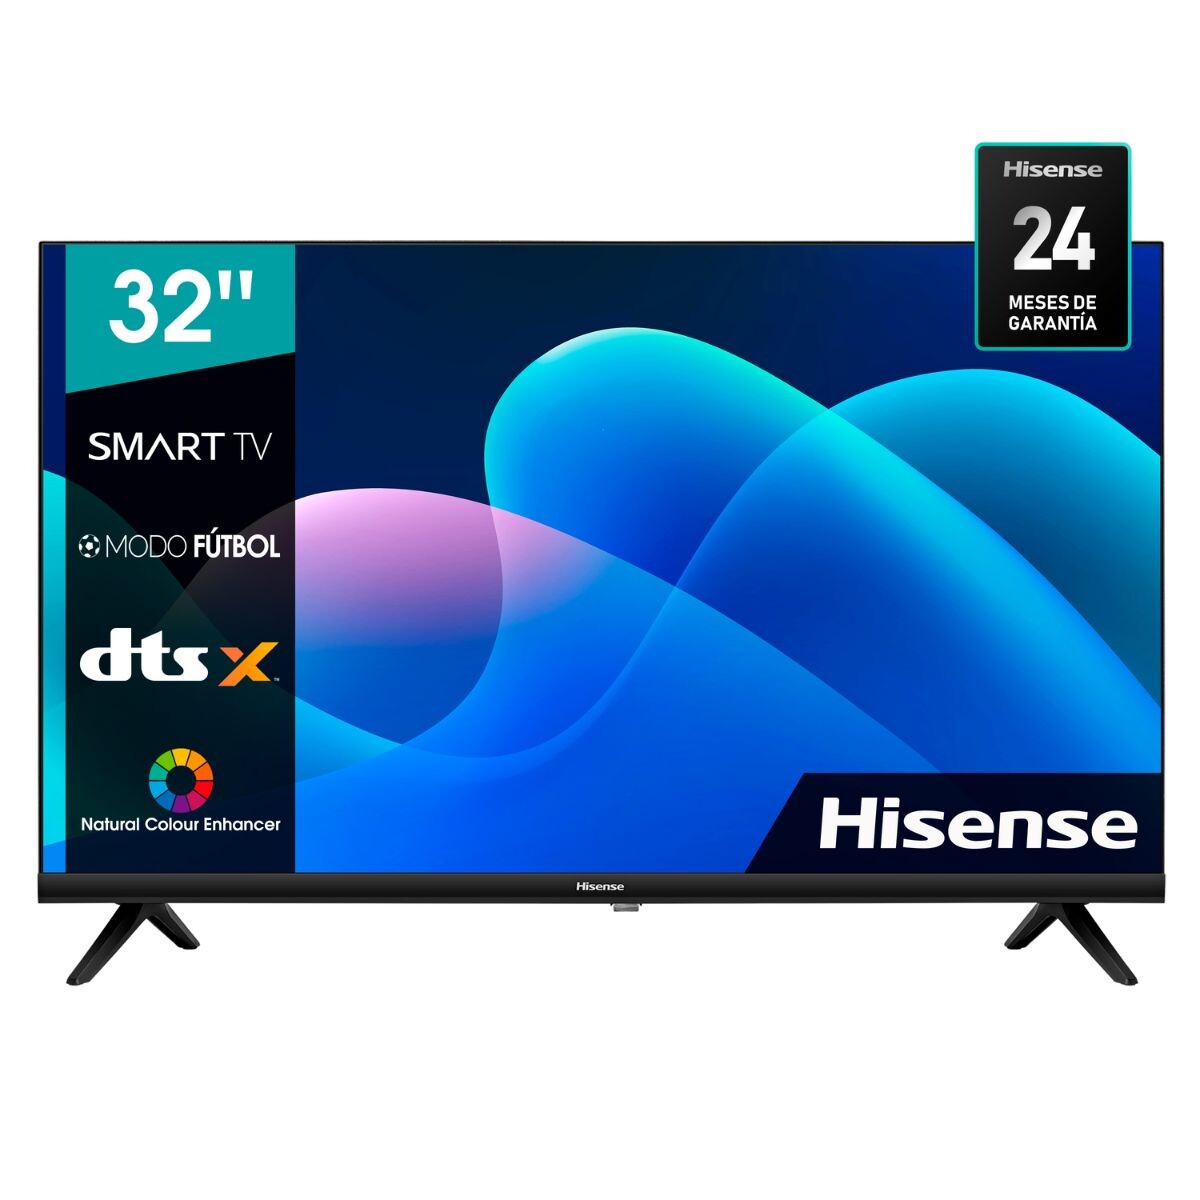 Hisense Smart TV 32 HD 